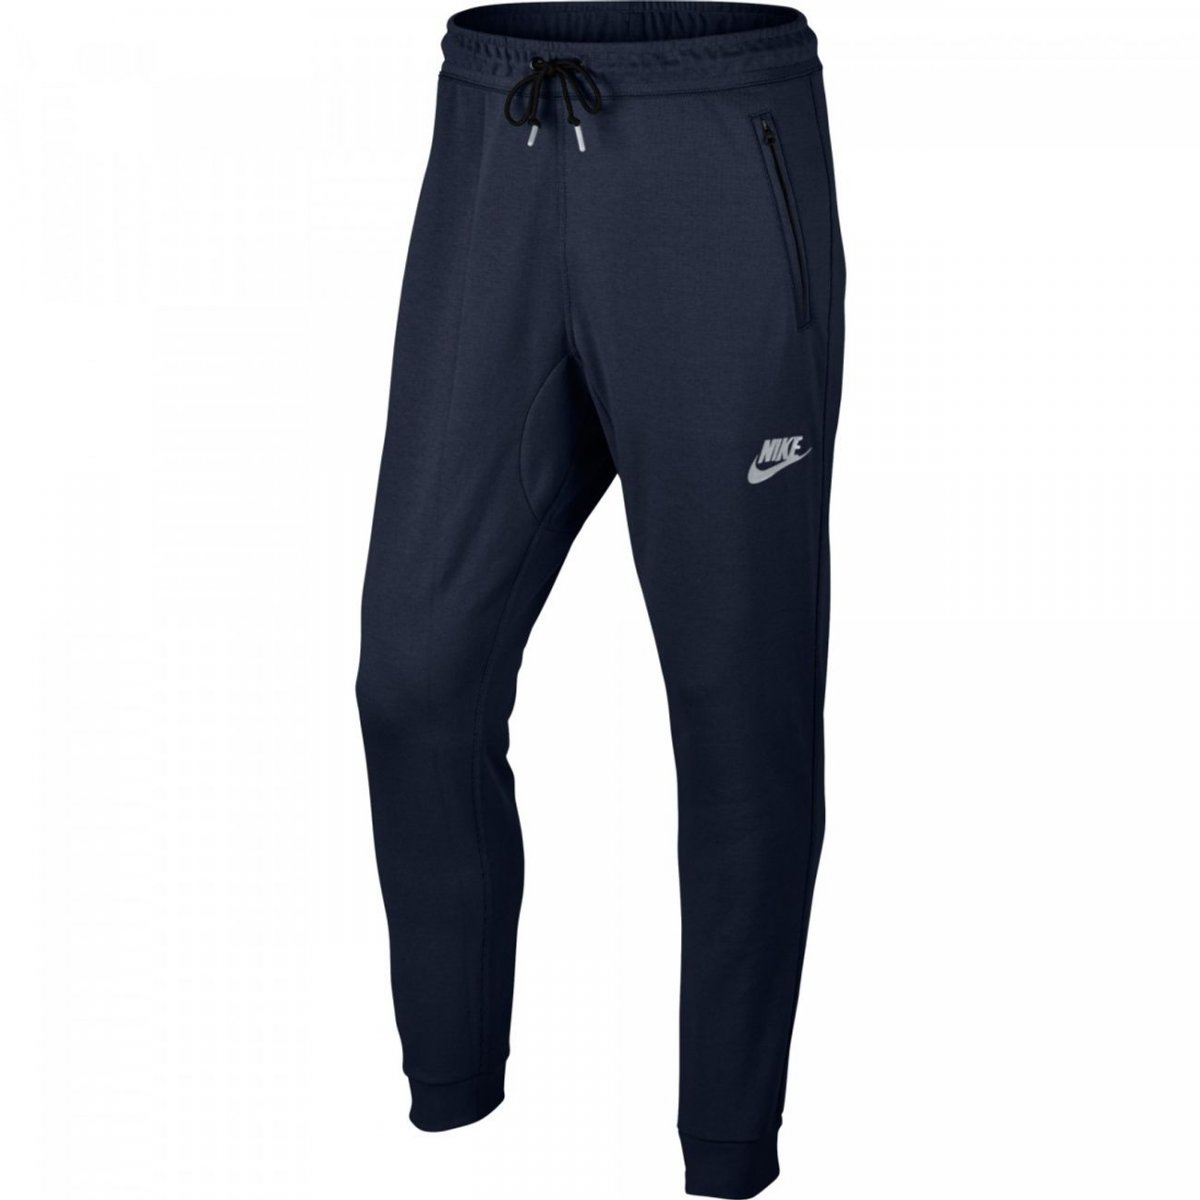 Nike Advance 15 Jogger Pants